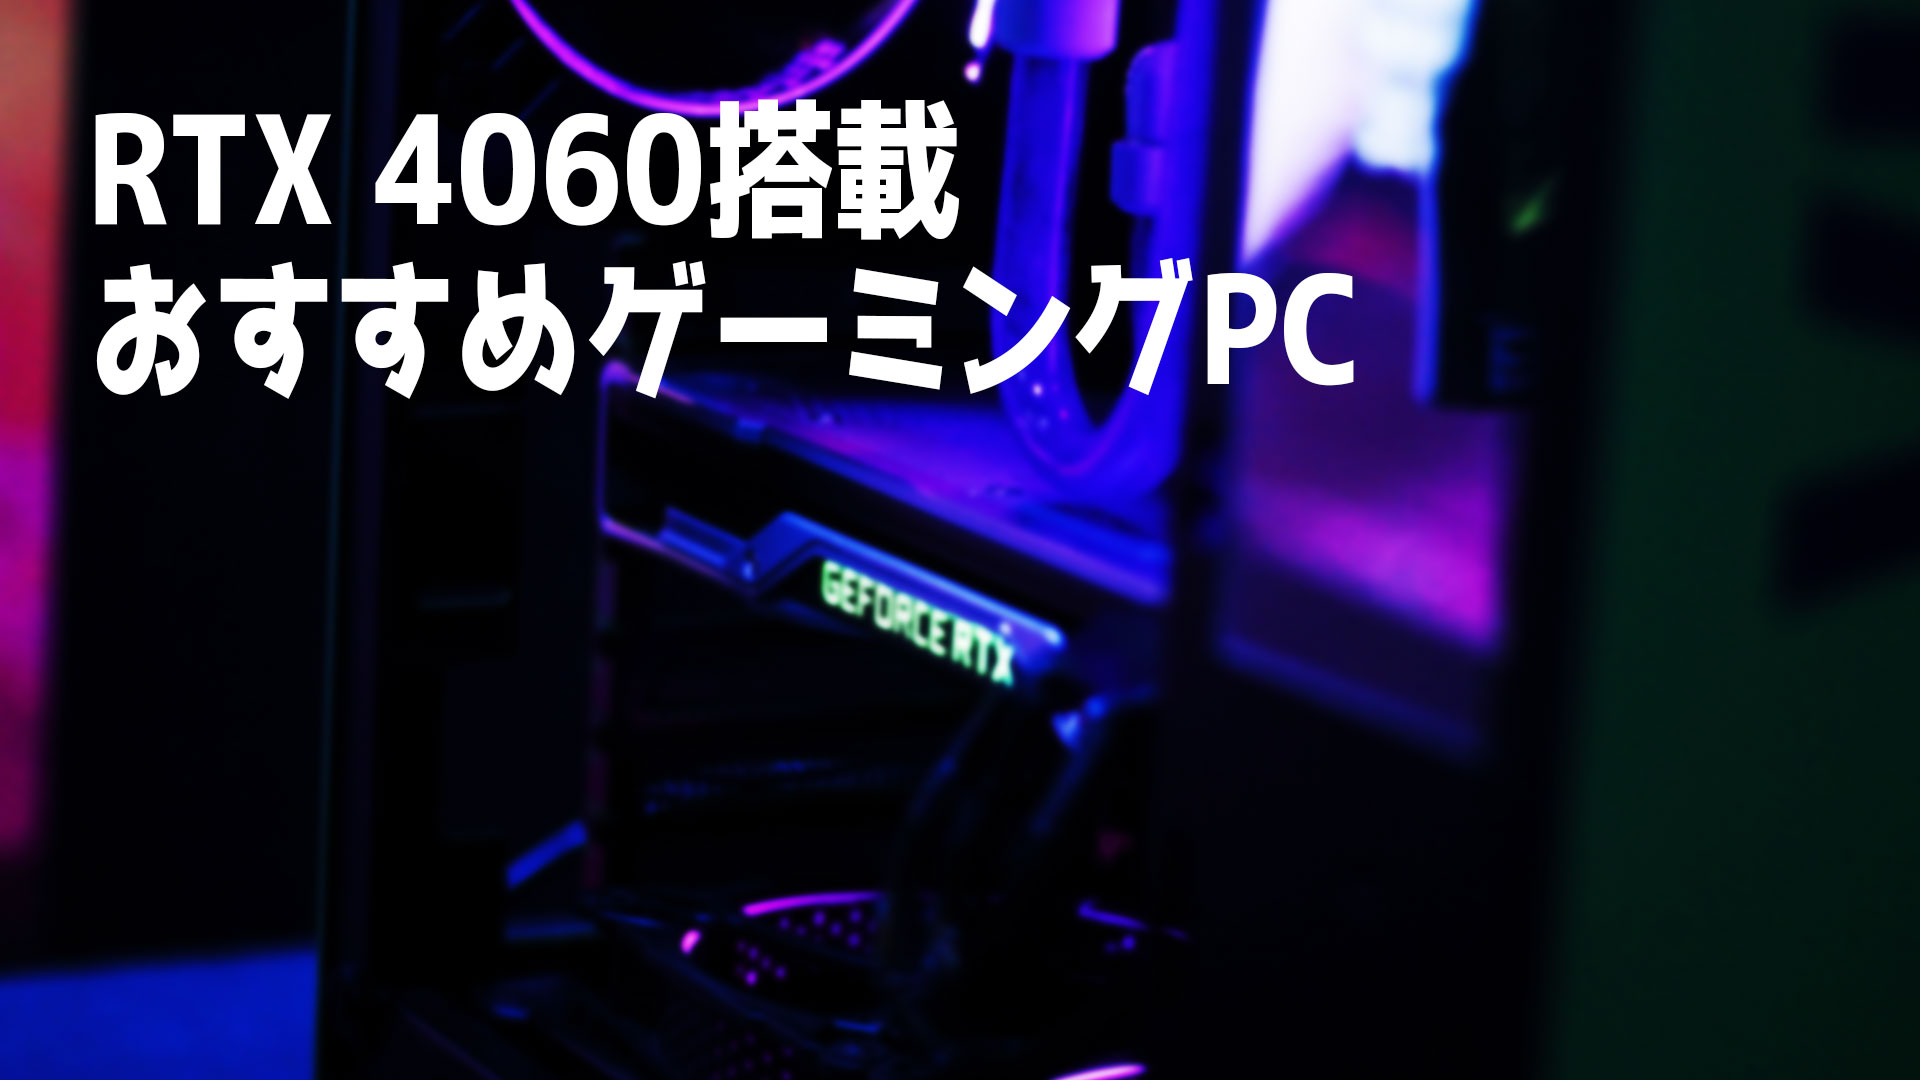 NVIDIA GeForce RTX 4060搭載のおすすめゲーミングPC5選 – クスノキの家